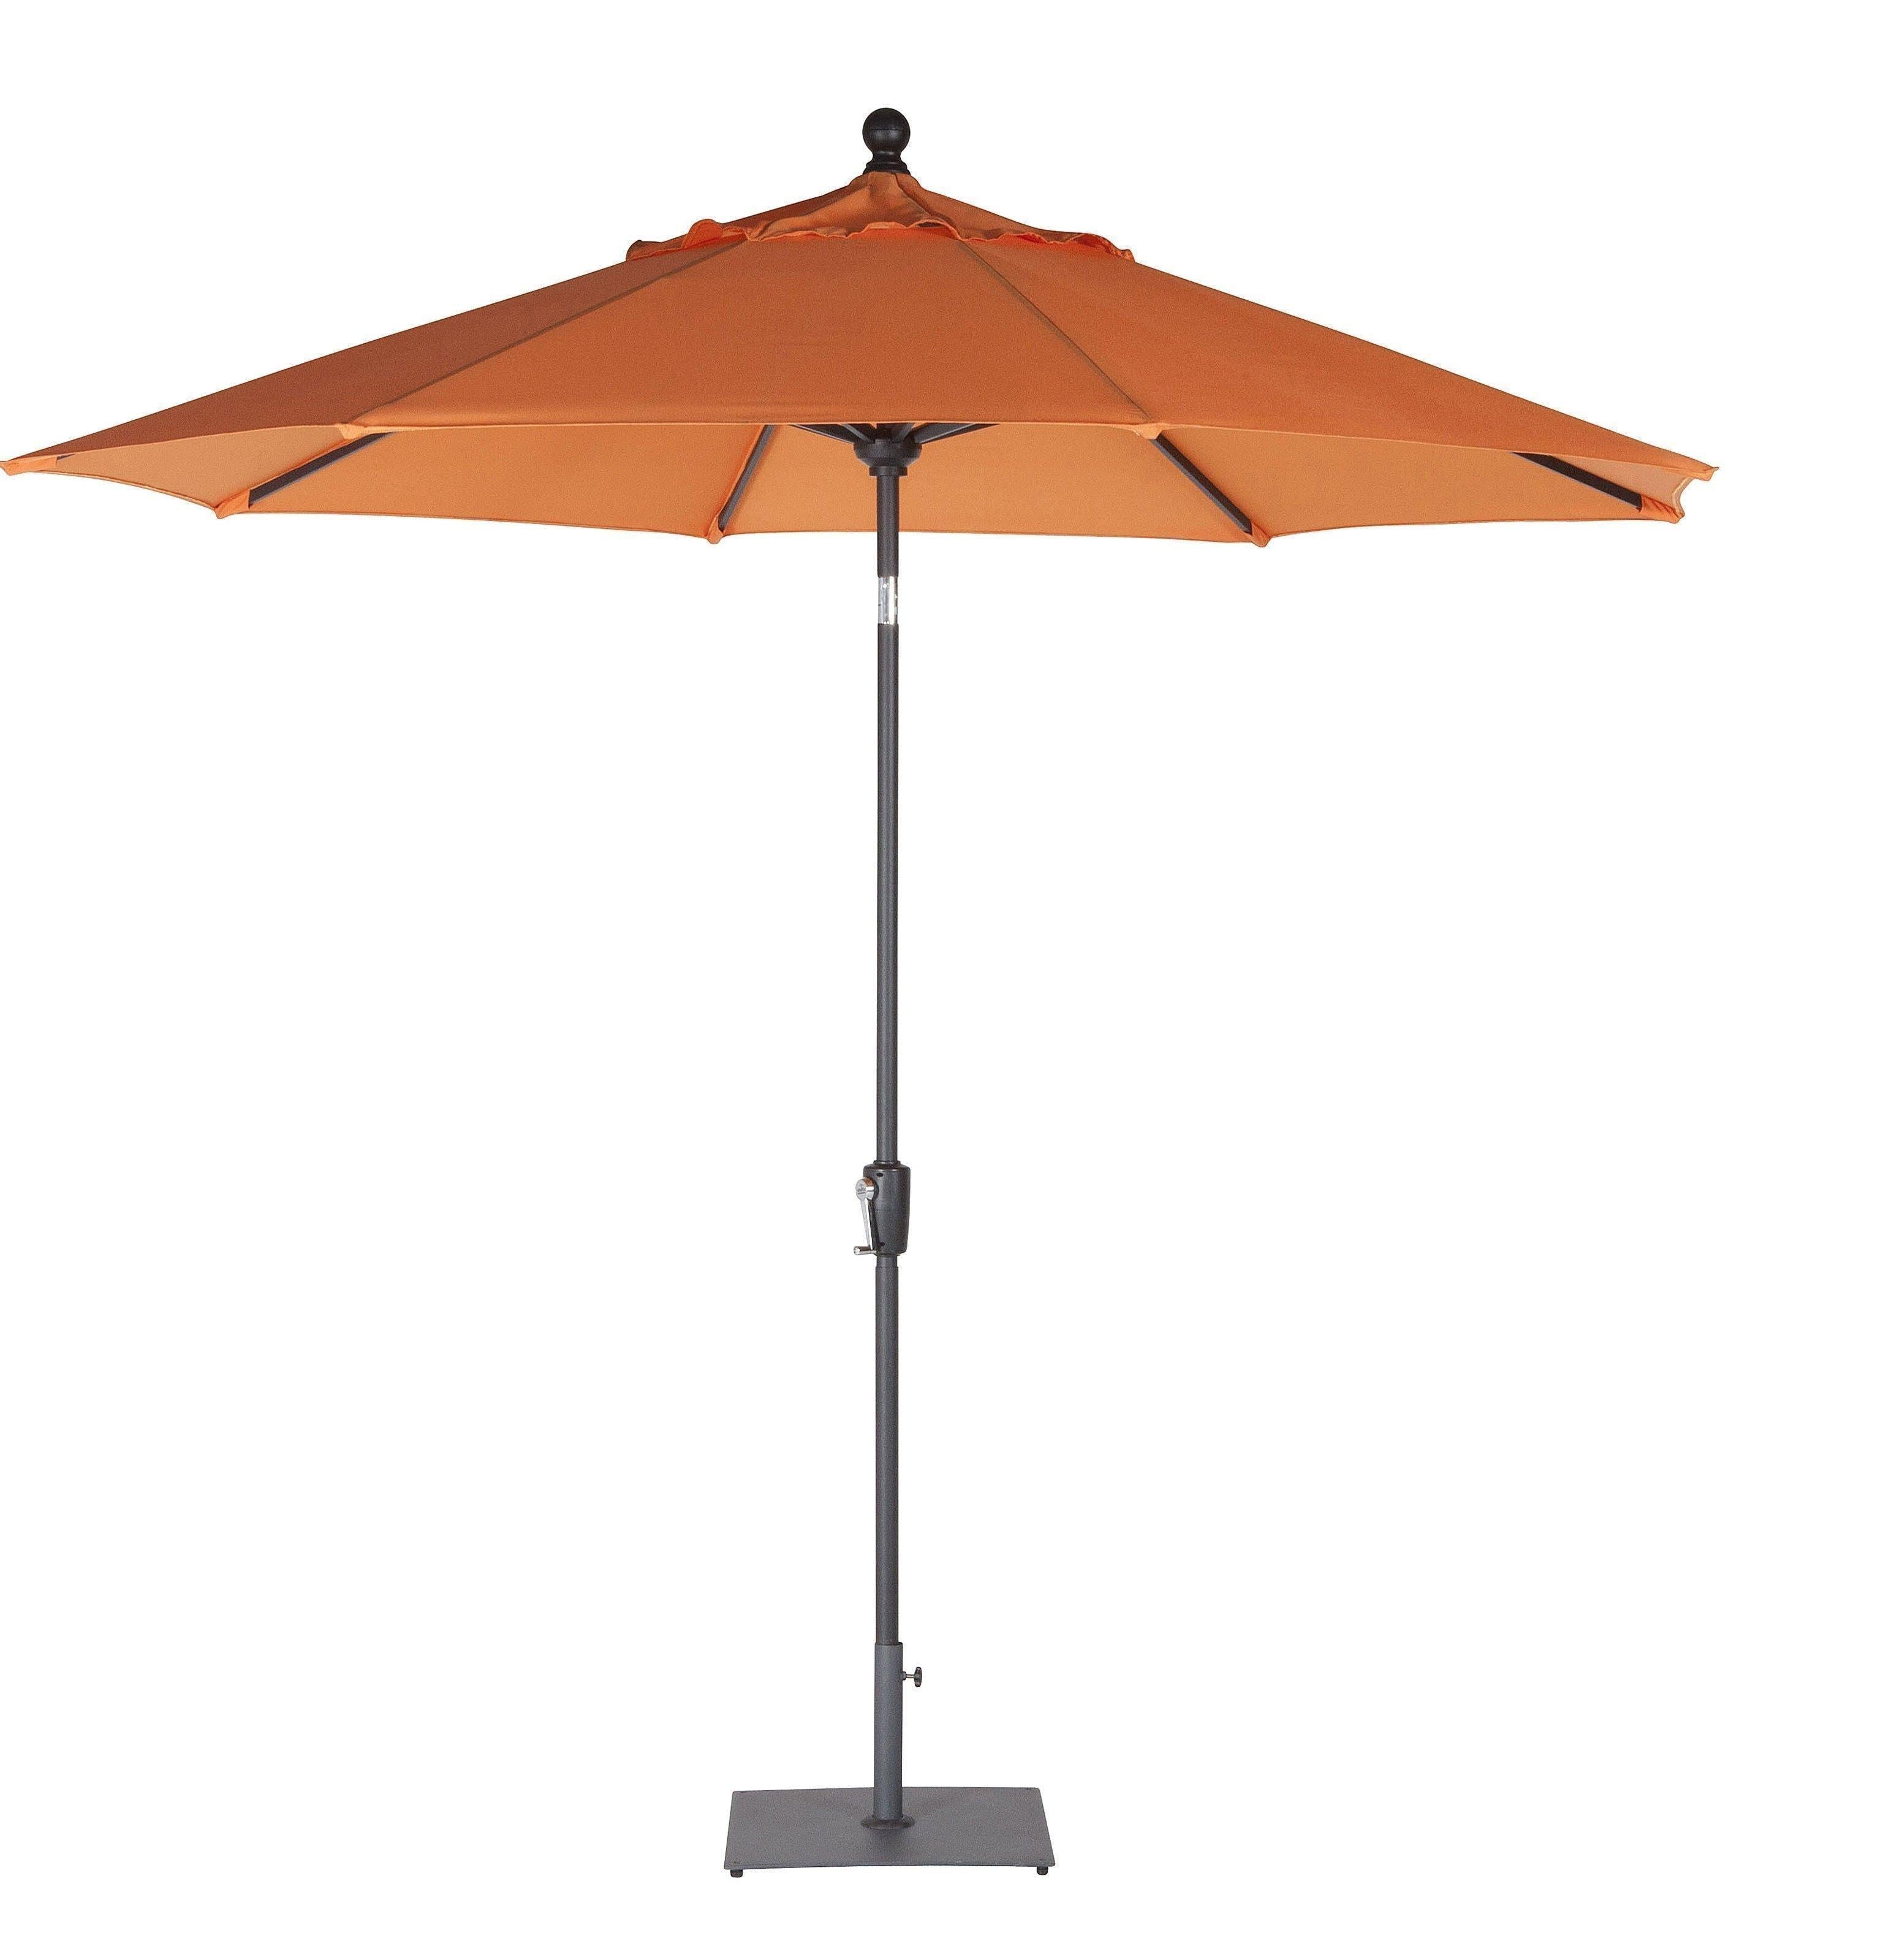 Shelta Rio 270 Umbrella, Umbrella, Shelta